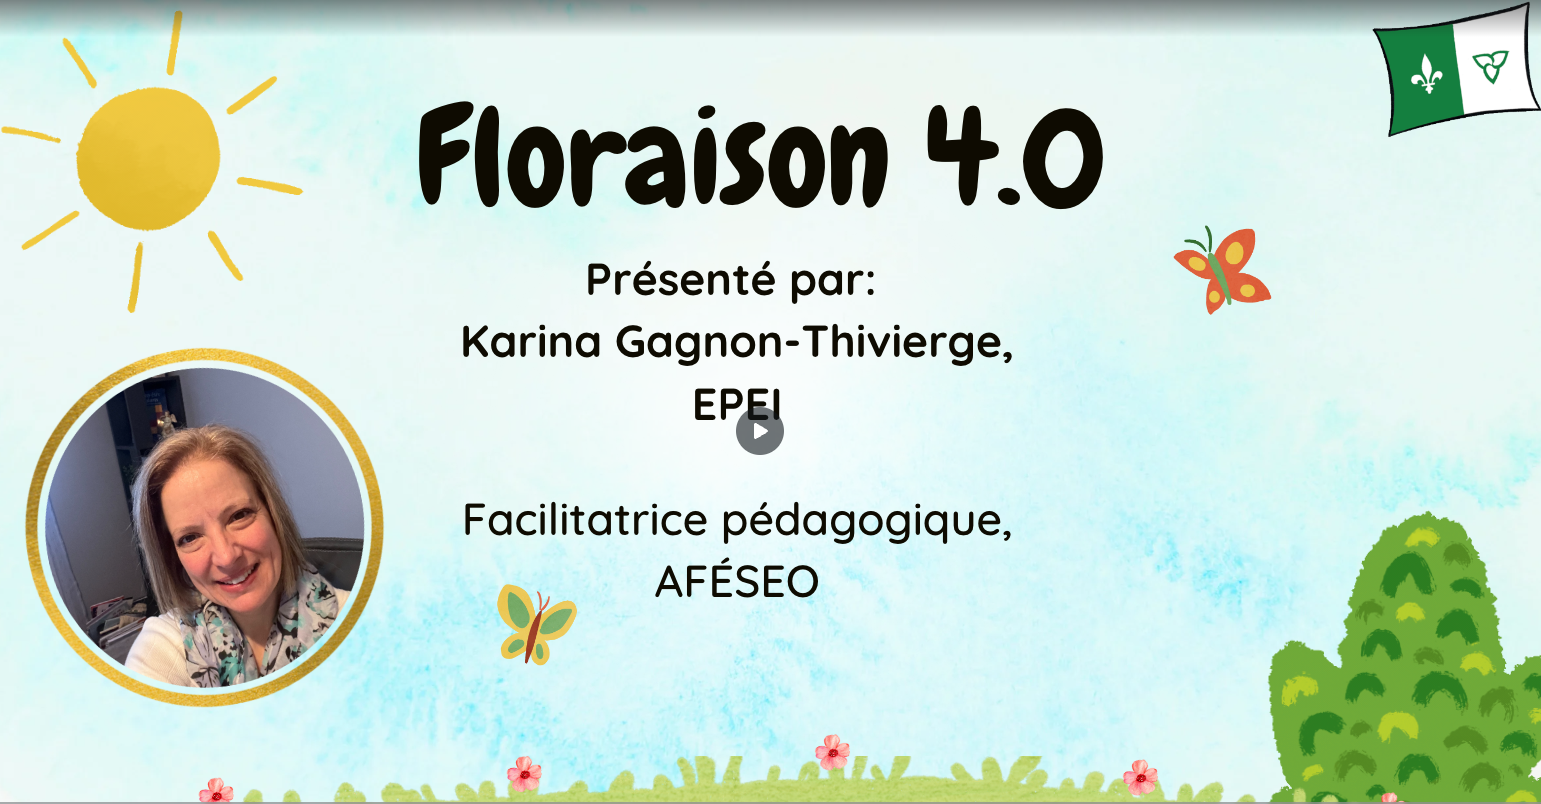 IM doc andragogique de Karina Floraison 4.0